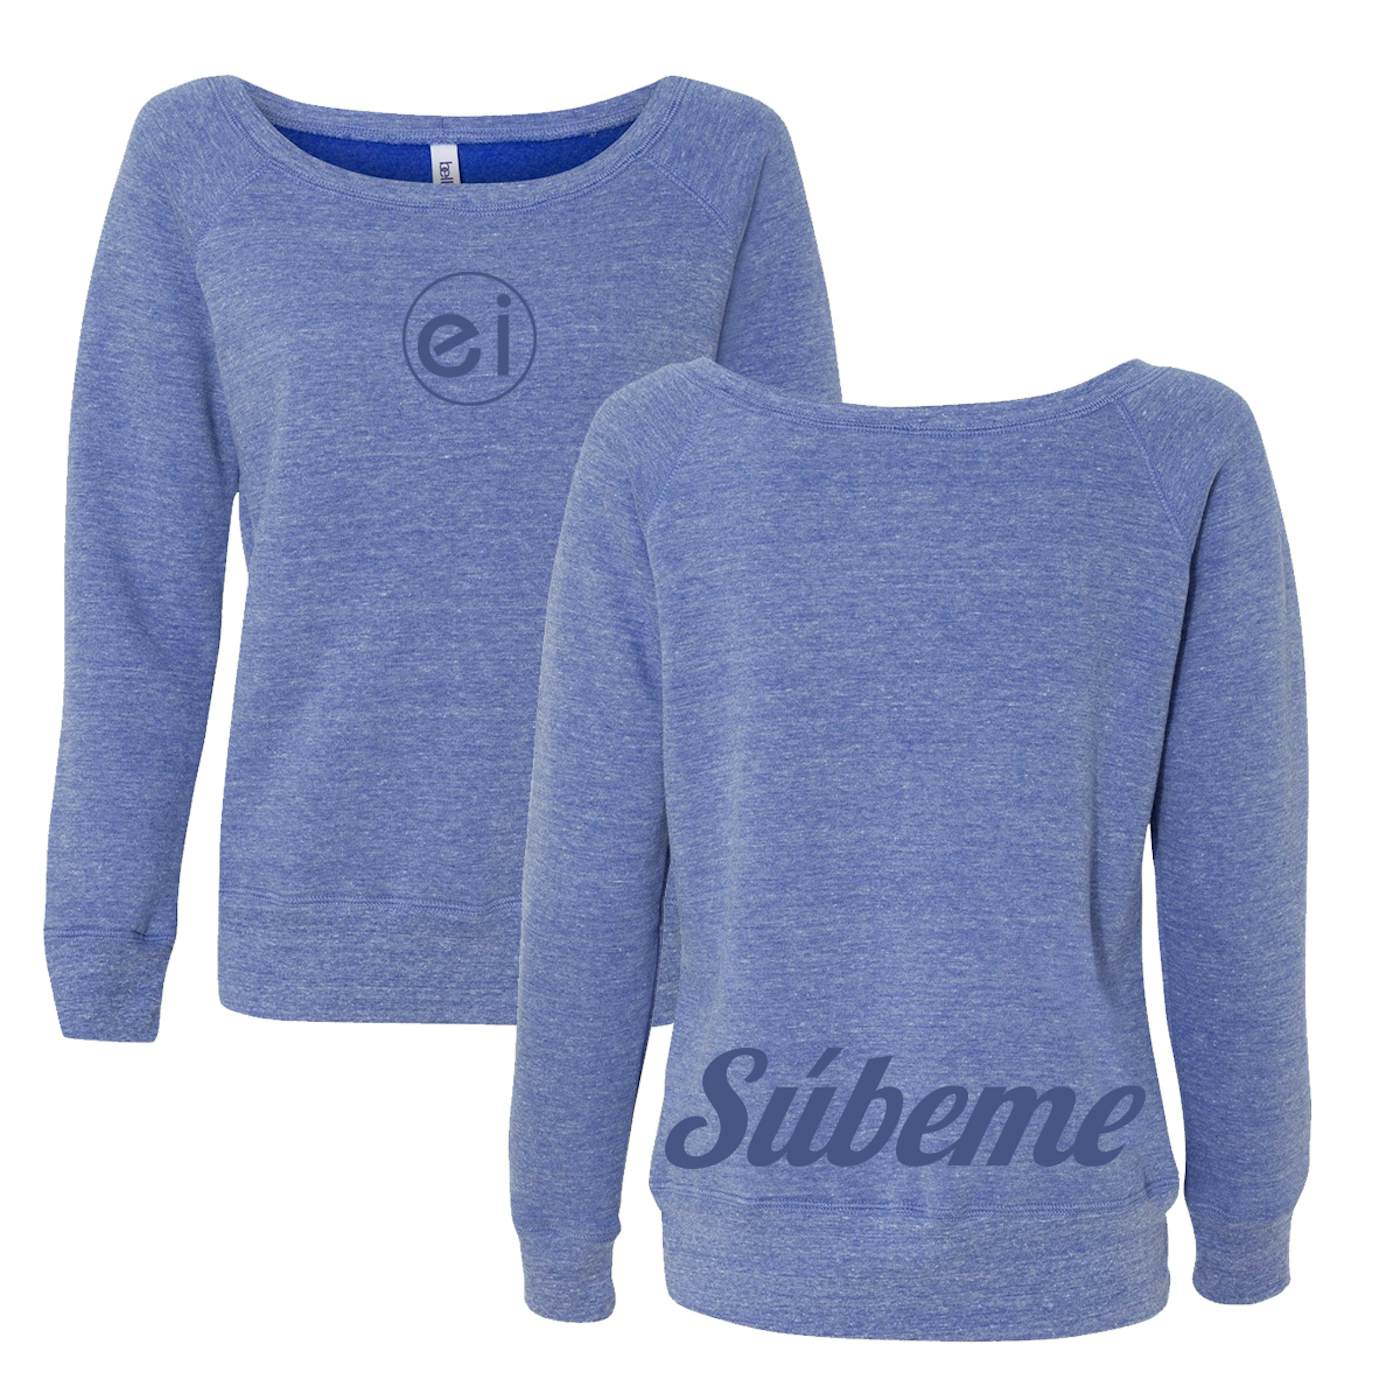 Enrique Iglesias Súbeme Ladies Sweatshirt